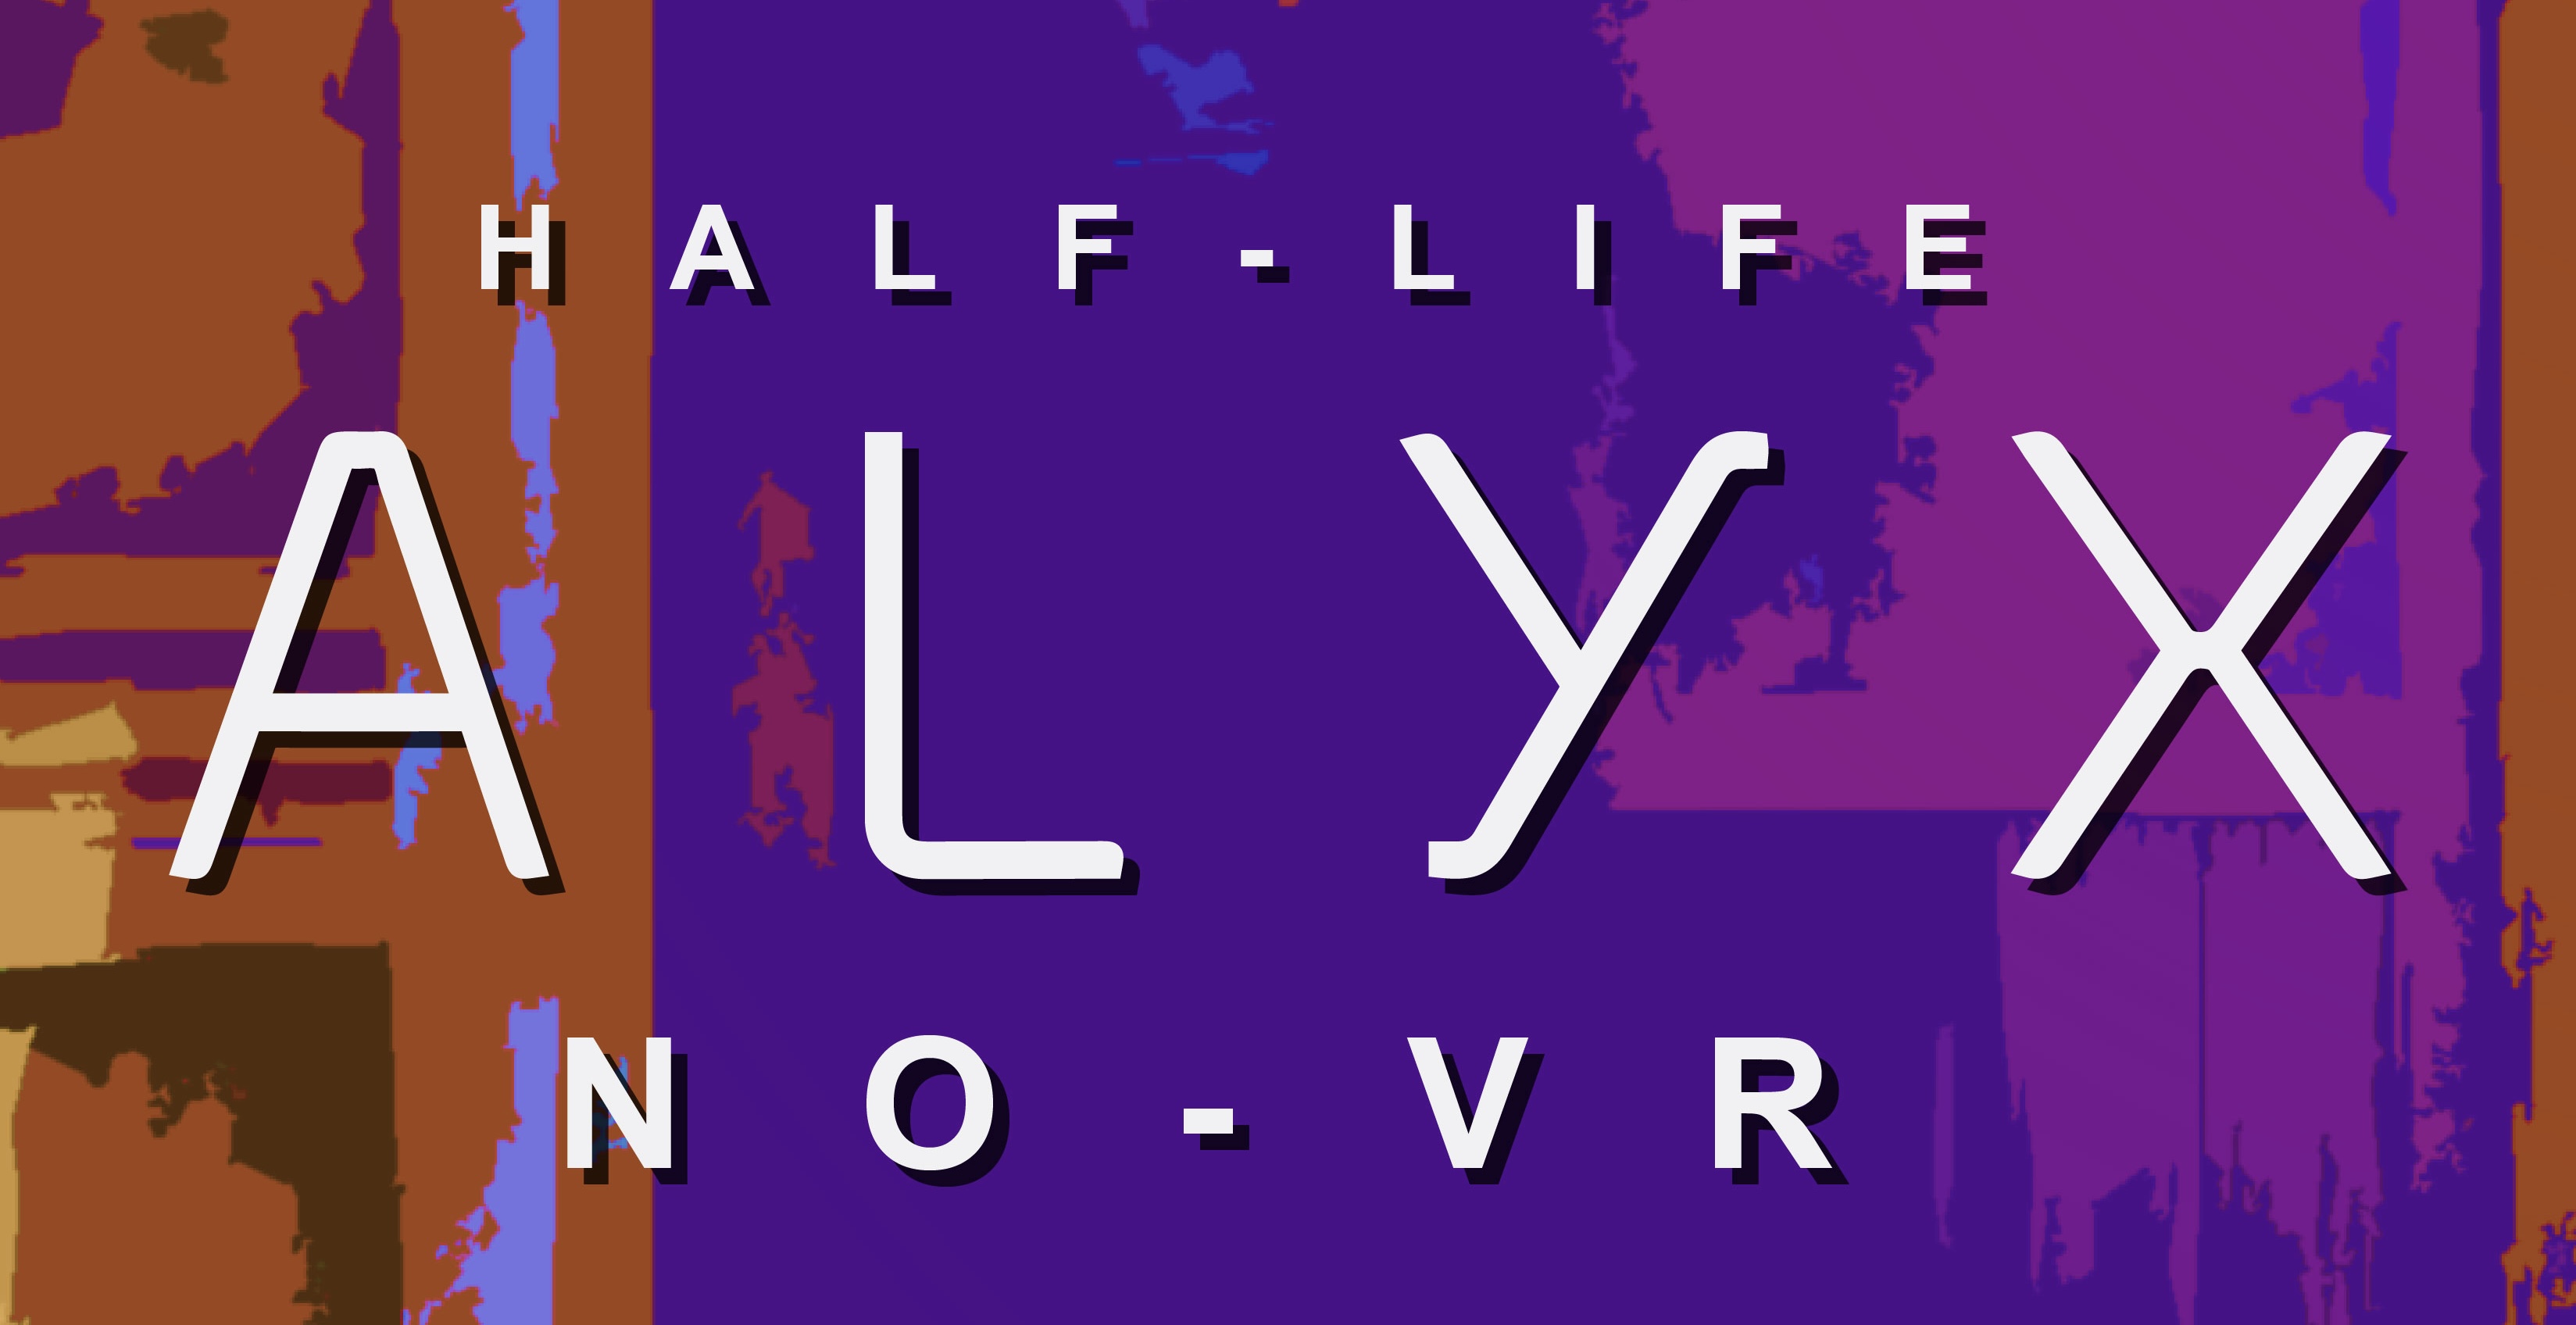 Half-Life Alyx NoVR - Steam Deck Version (December 1st, 2023) file - ModDB